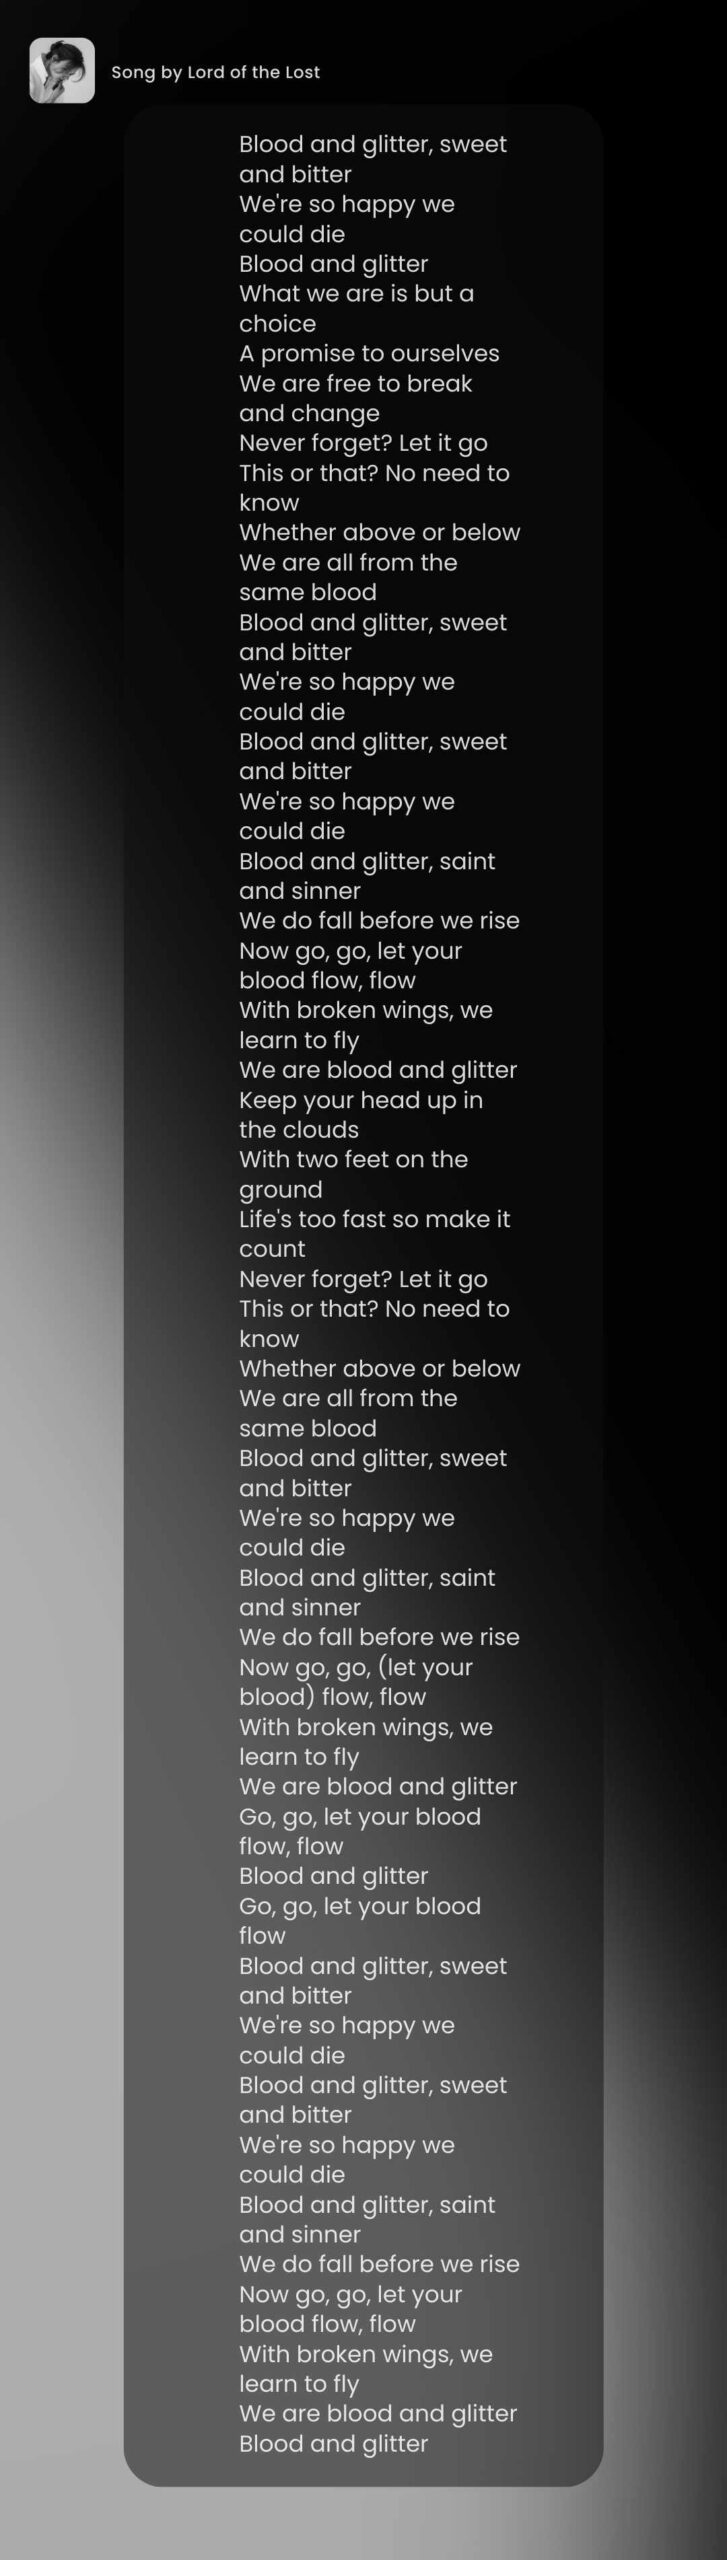 Blood and glitter lyrics